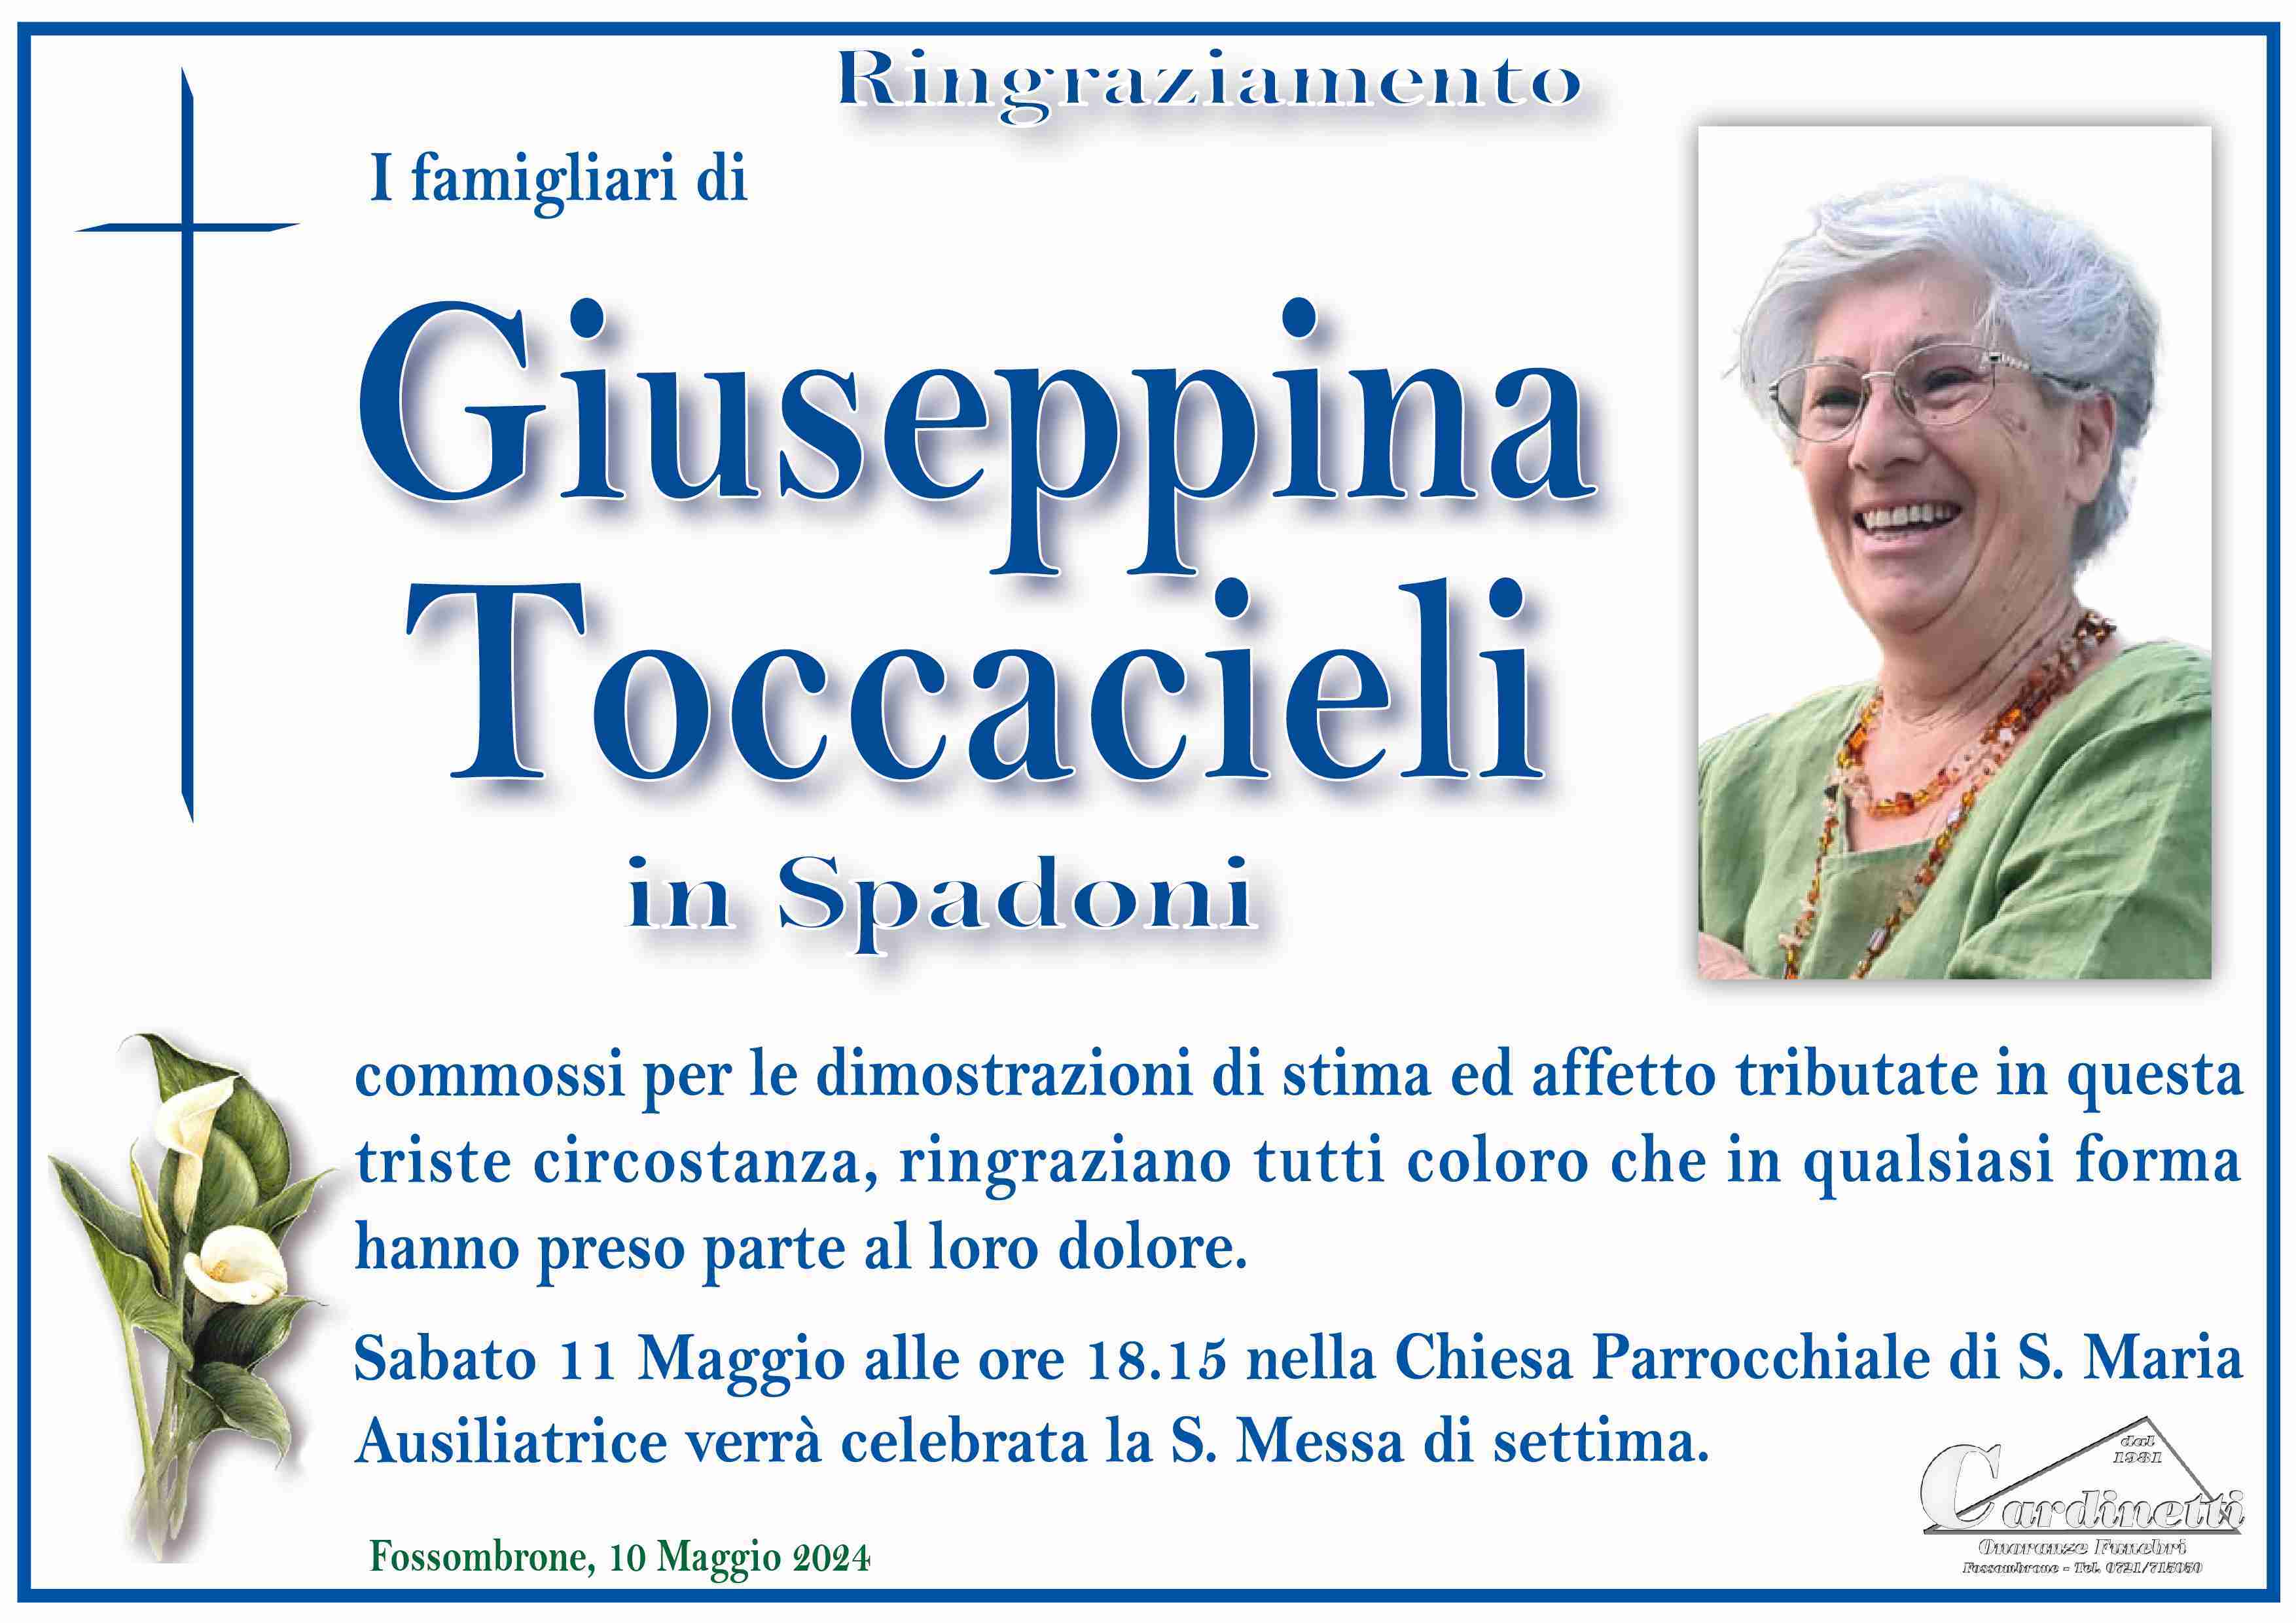 Giuseppina Toccacieli